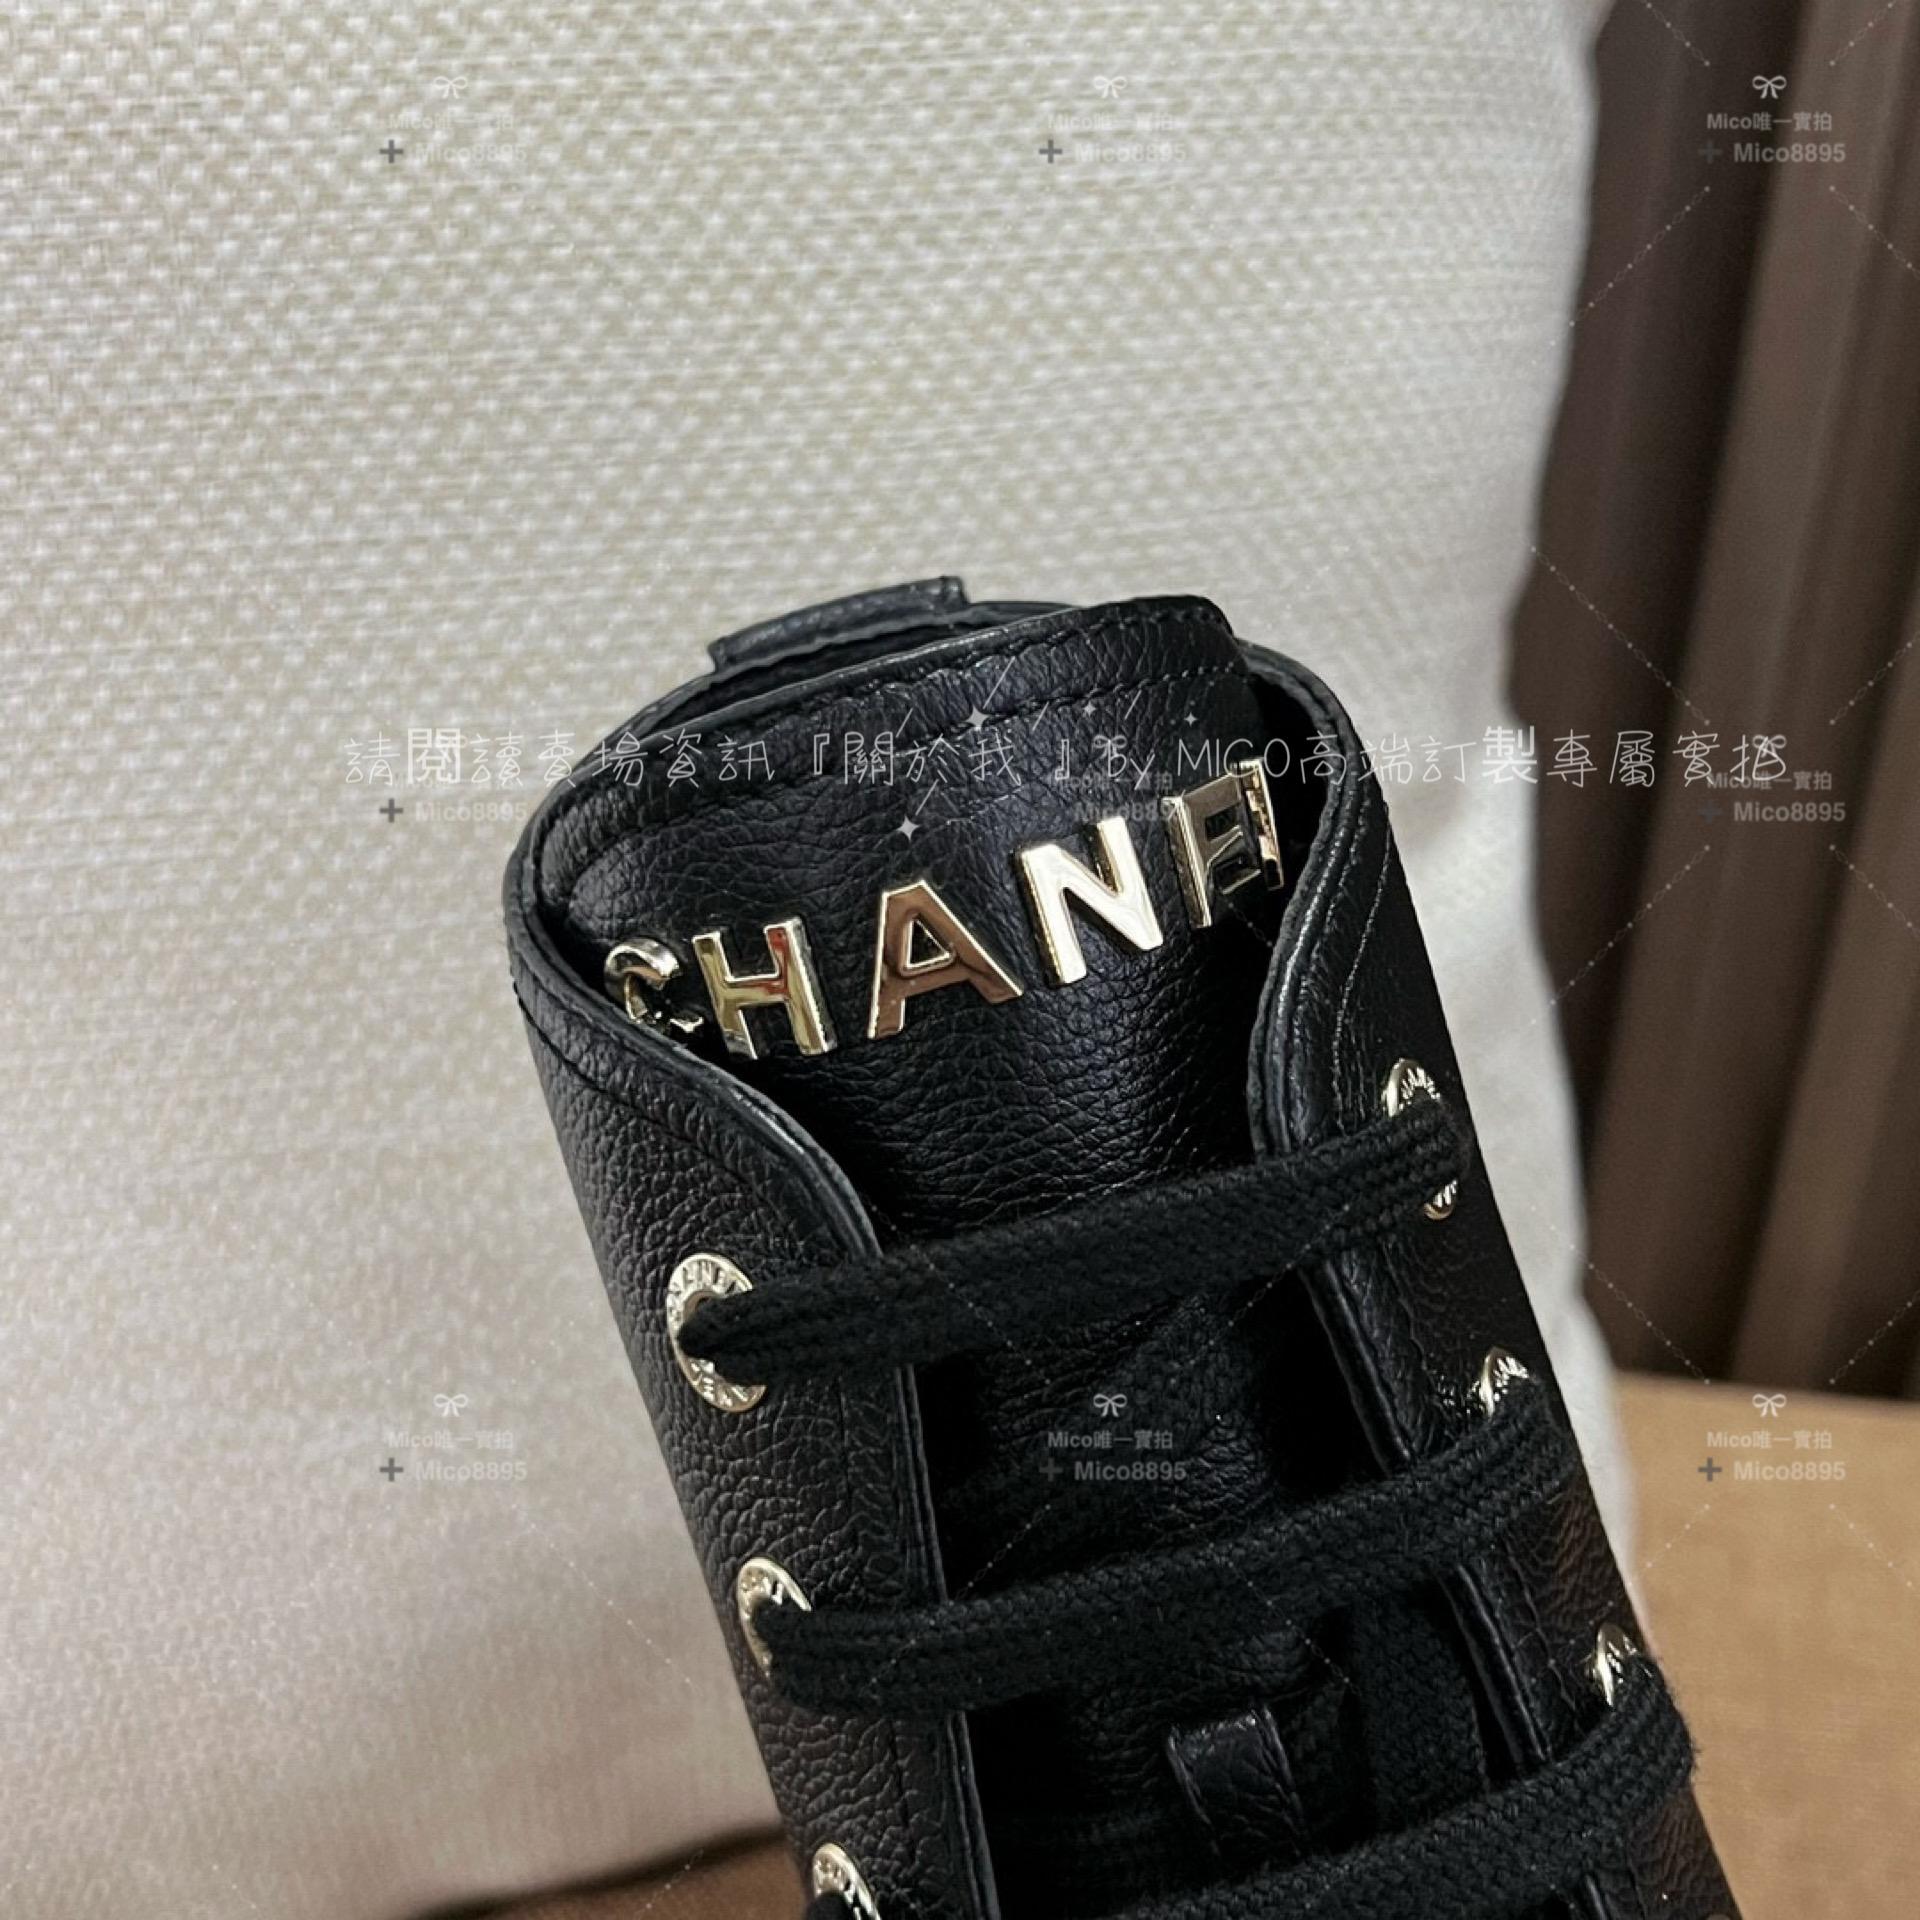 Chanel 22B 新款字母短靴 全皮鞋面 荔枝紋牛皮 底厚5cm 35-39